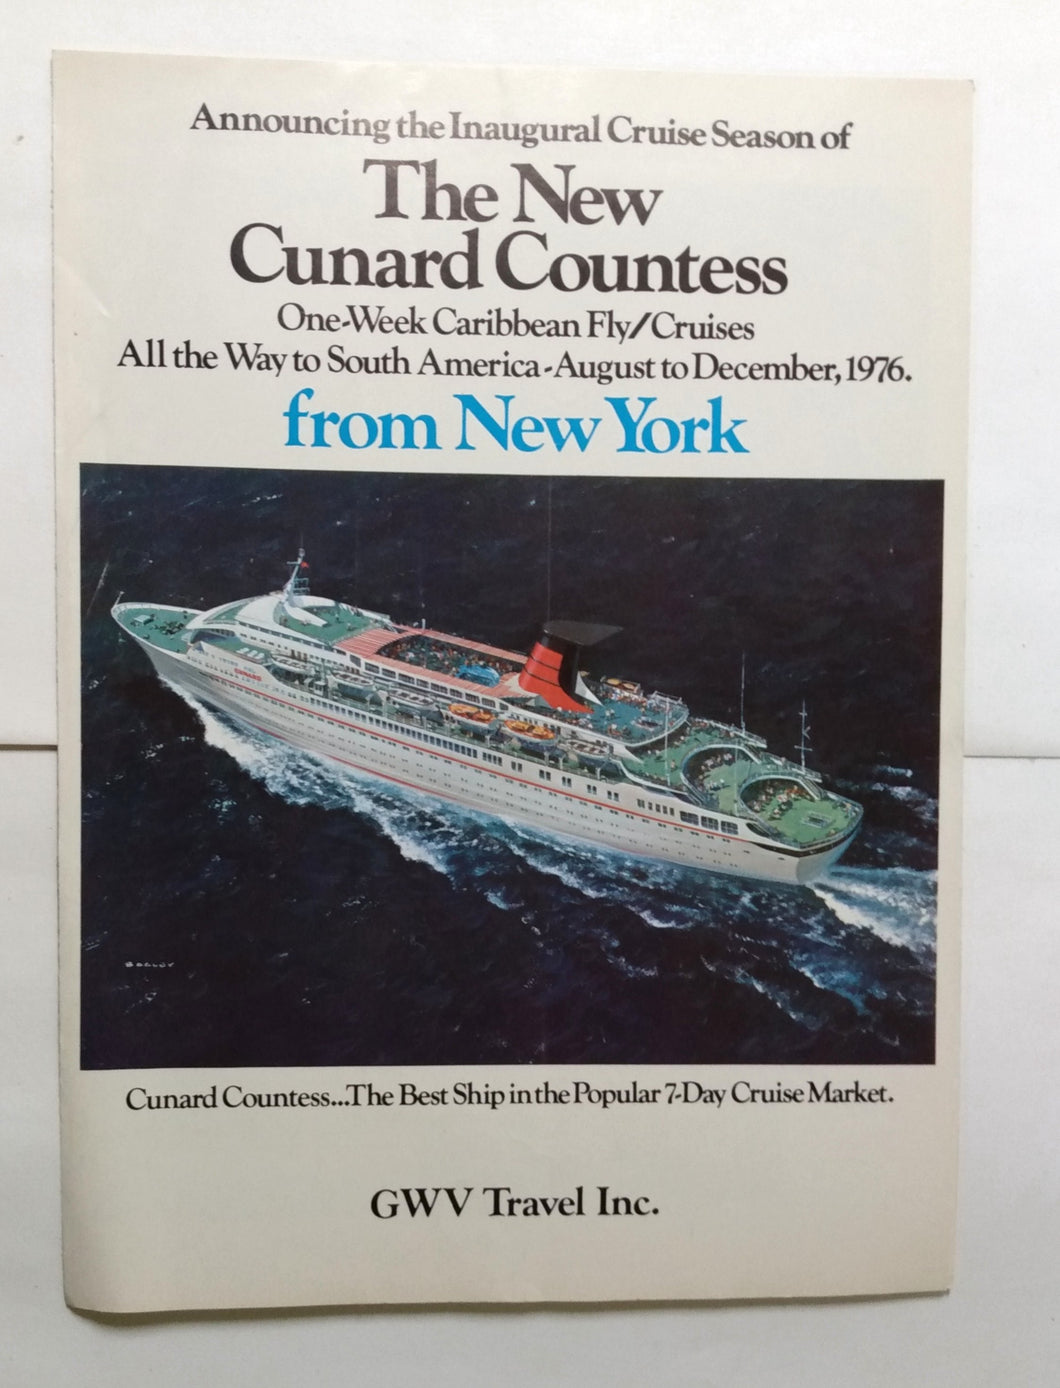 Cunard Countess 1976 Inaugural Cruise Season Fly/Cruises from New York Brochure